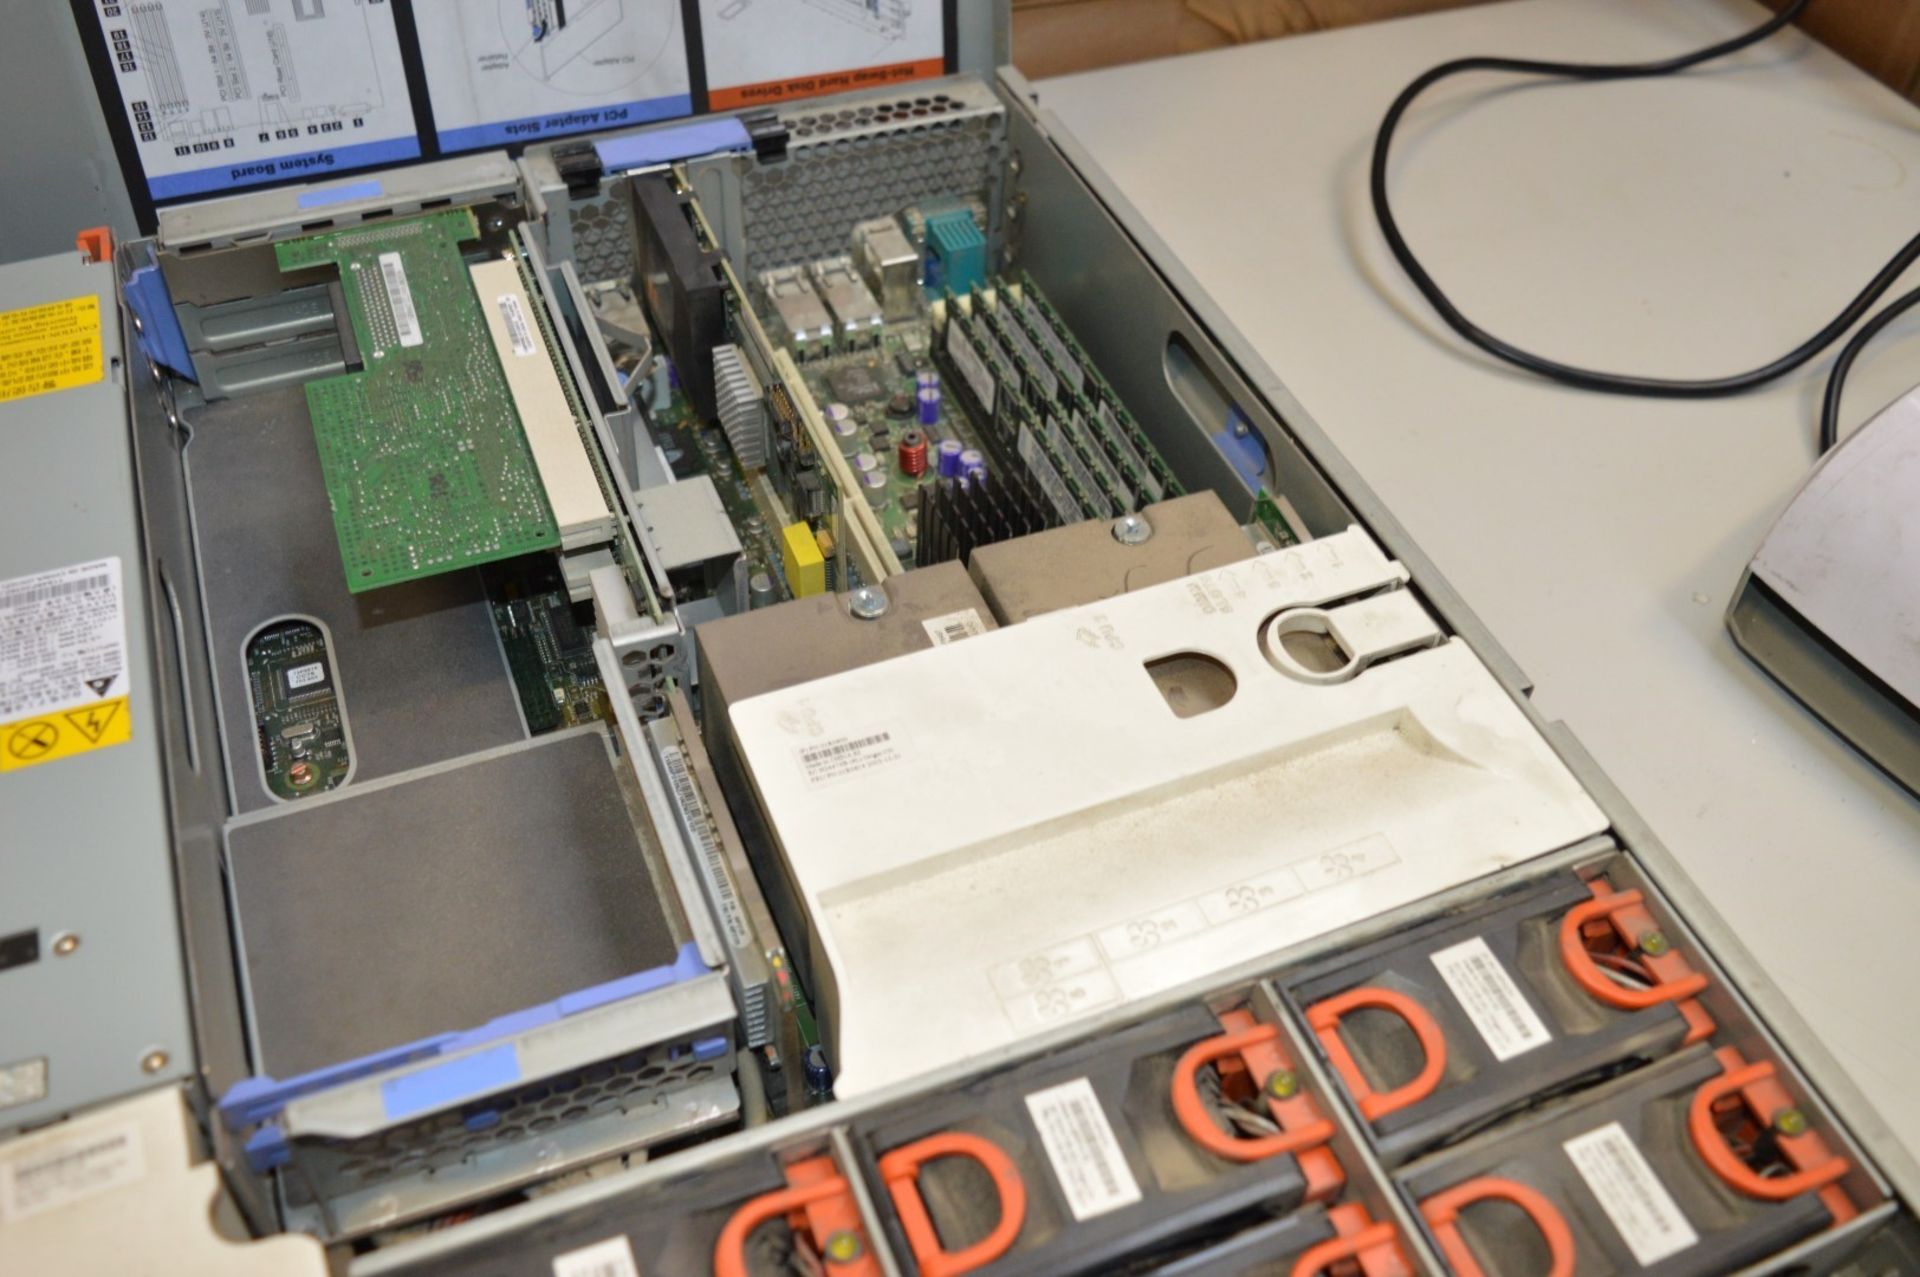 1 x IBM xSeries 345 Server - Includes Dual Xeon Processors, 1gb Ram, Raid Card - Hard Disk Drives - Image 4 of 8